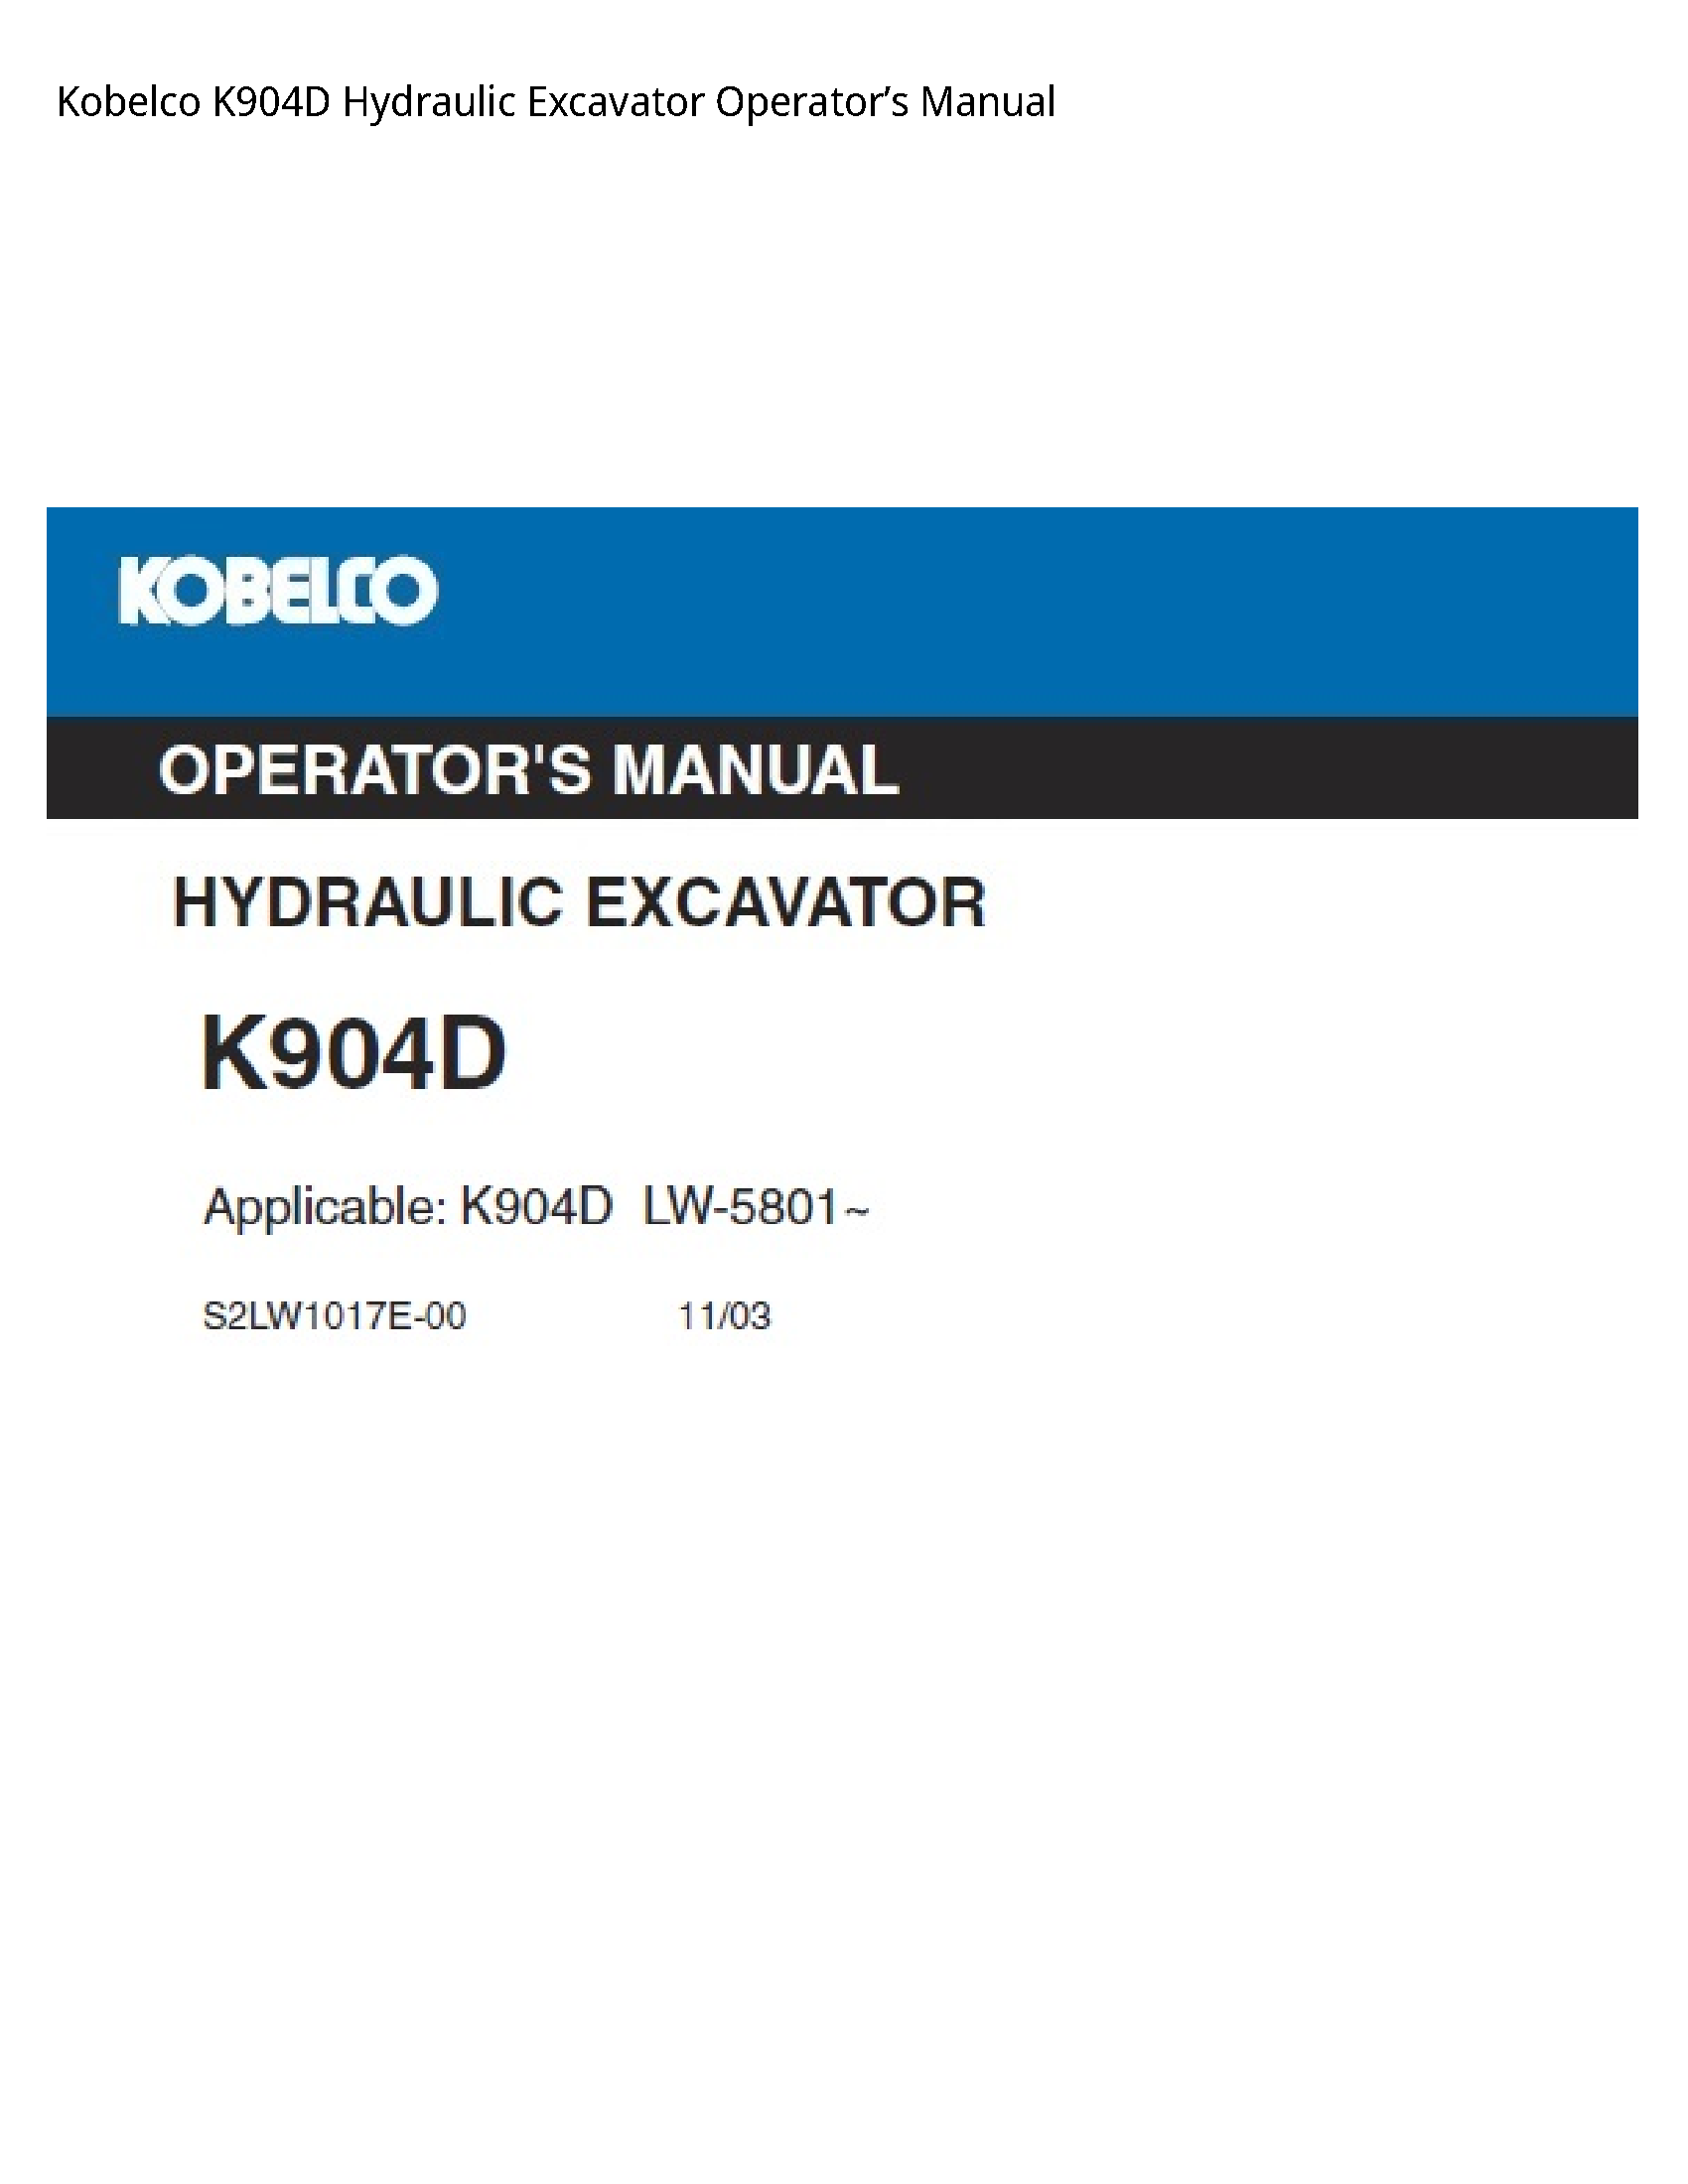 Kobelco K904D Hydraulic Excavator Operator’s manual